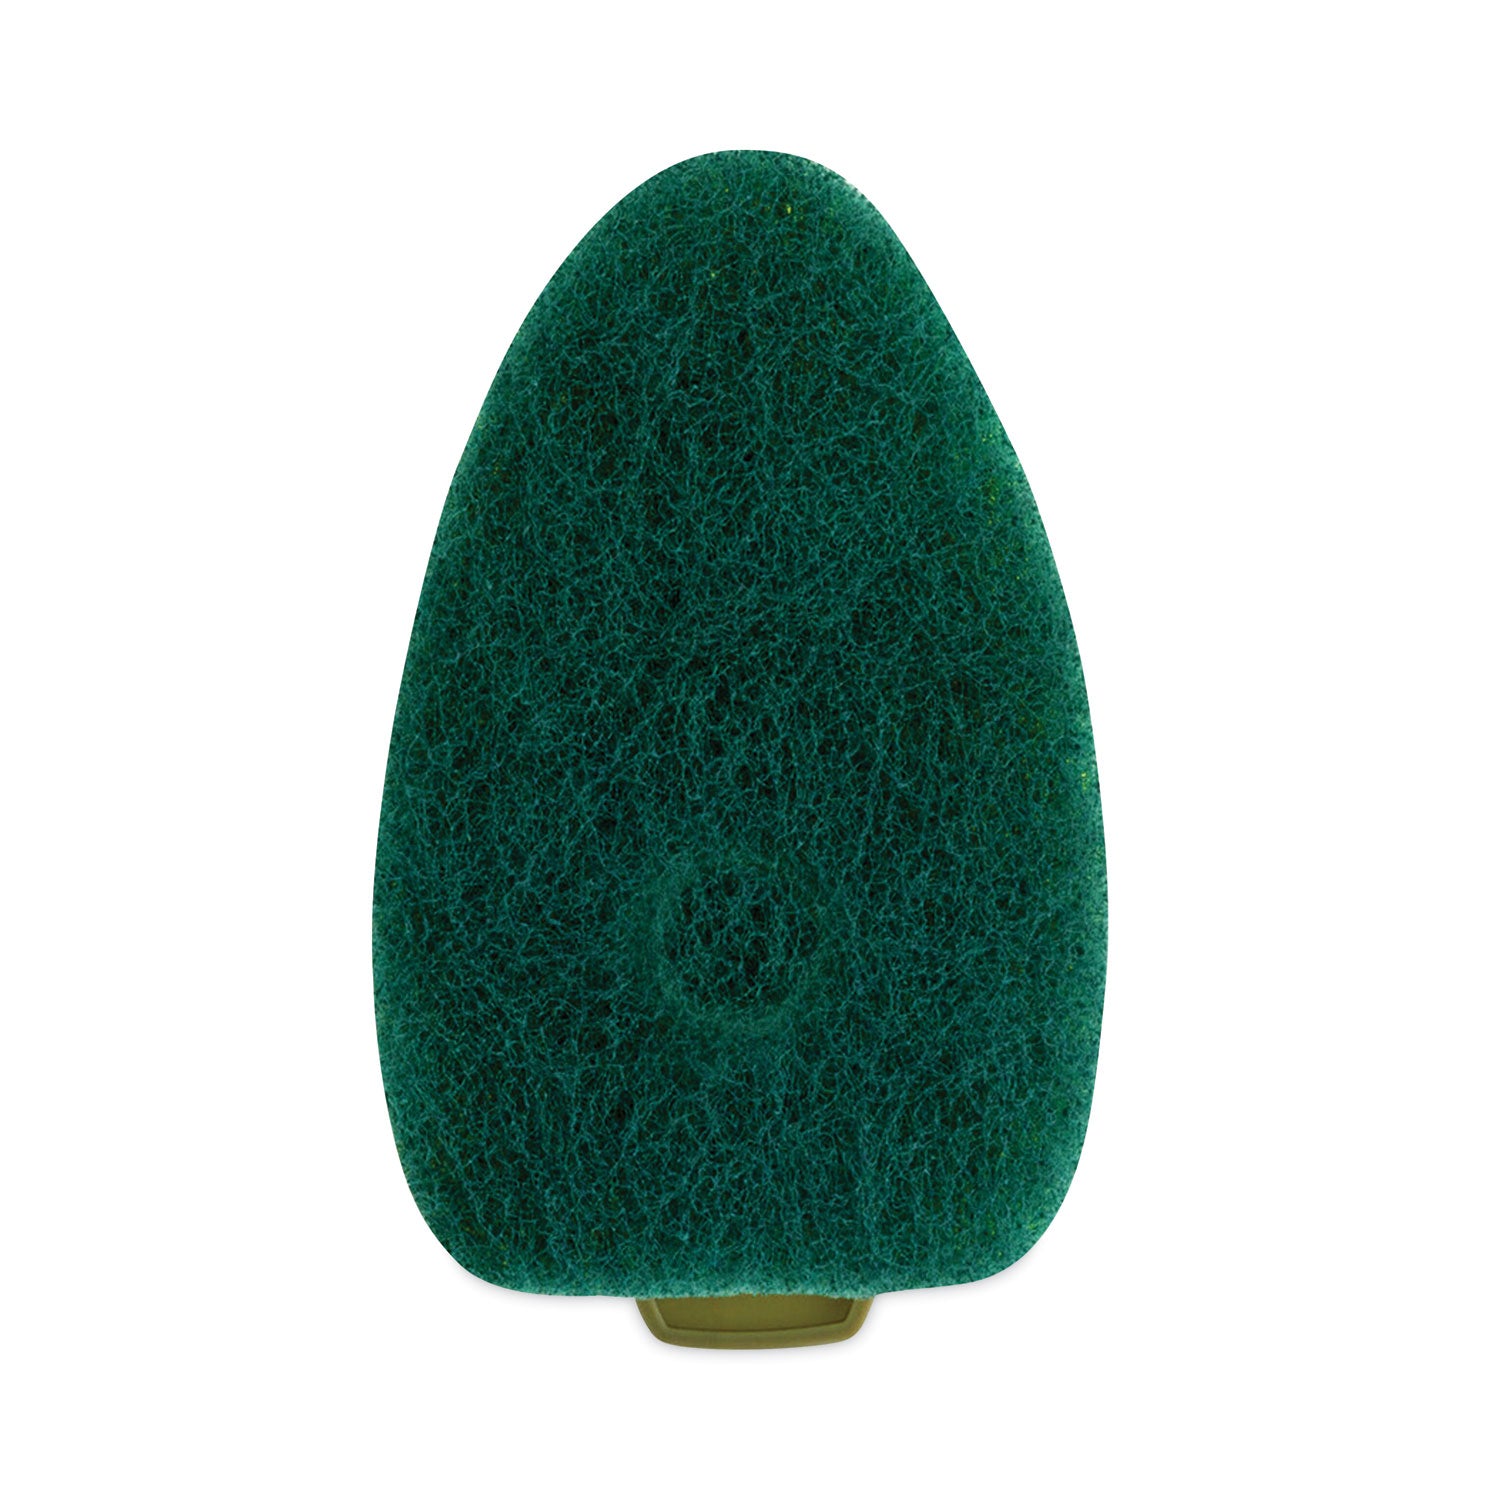 soap-dispensing-dishwand-sponge-refills-29-x-22-green-2-pack_mmm4817rsc - 5